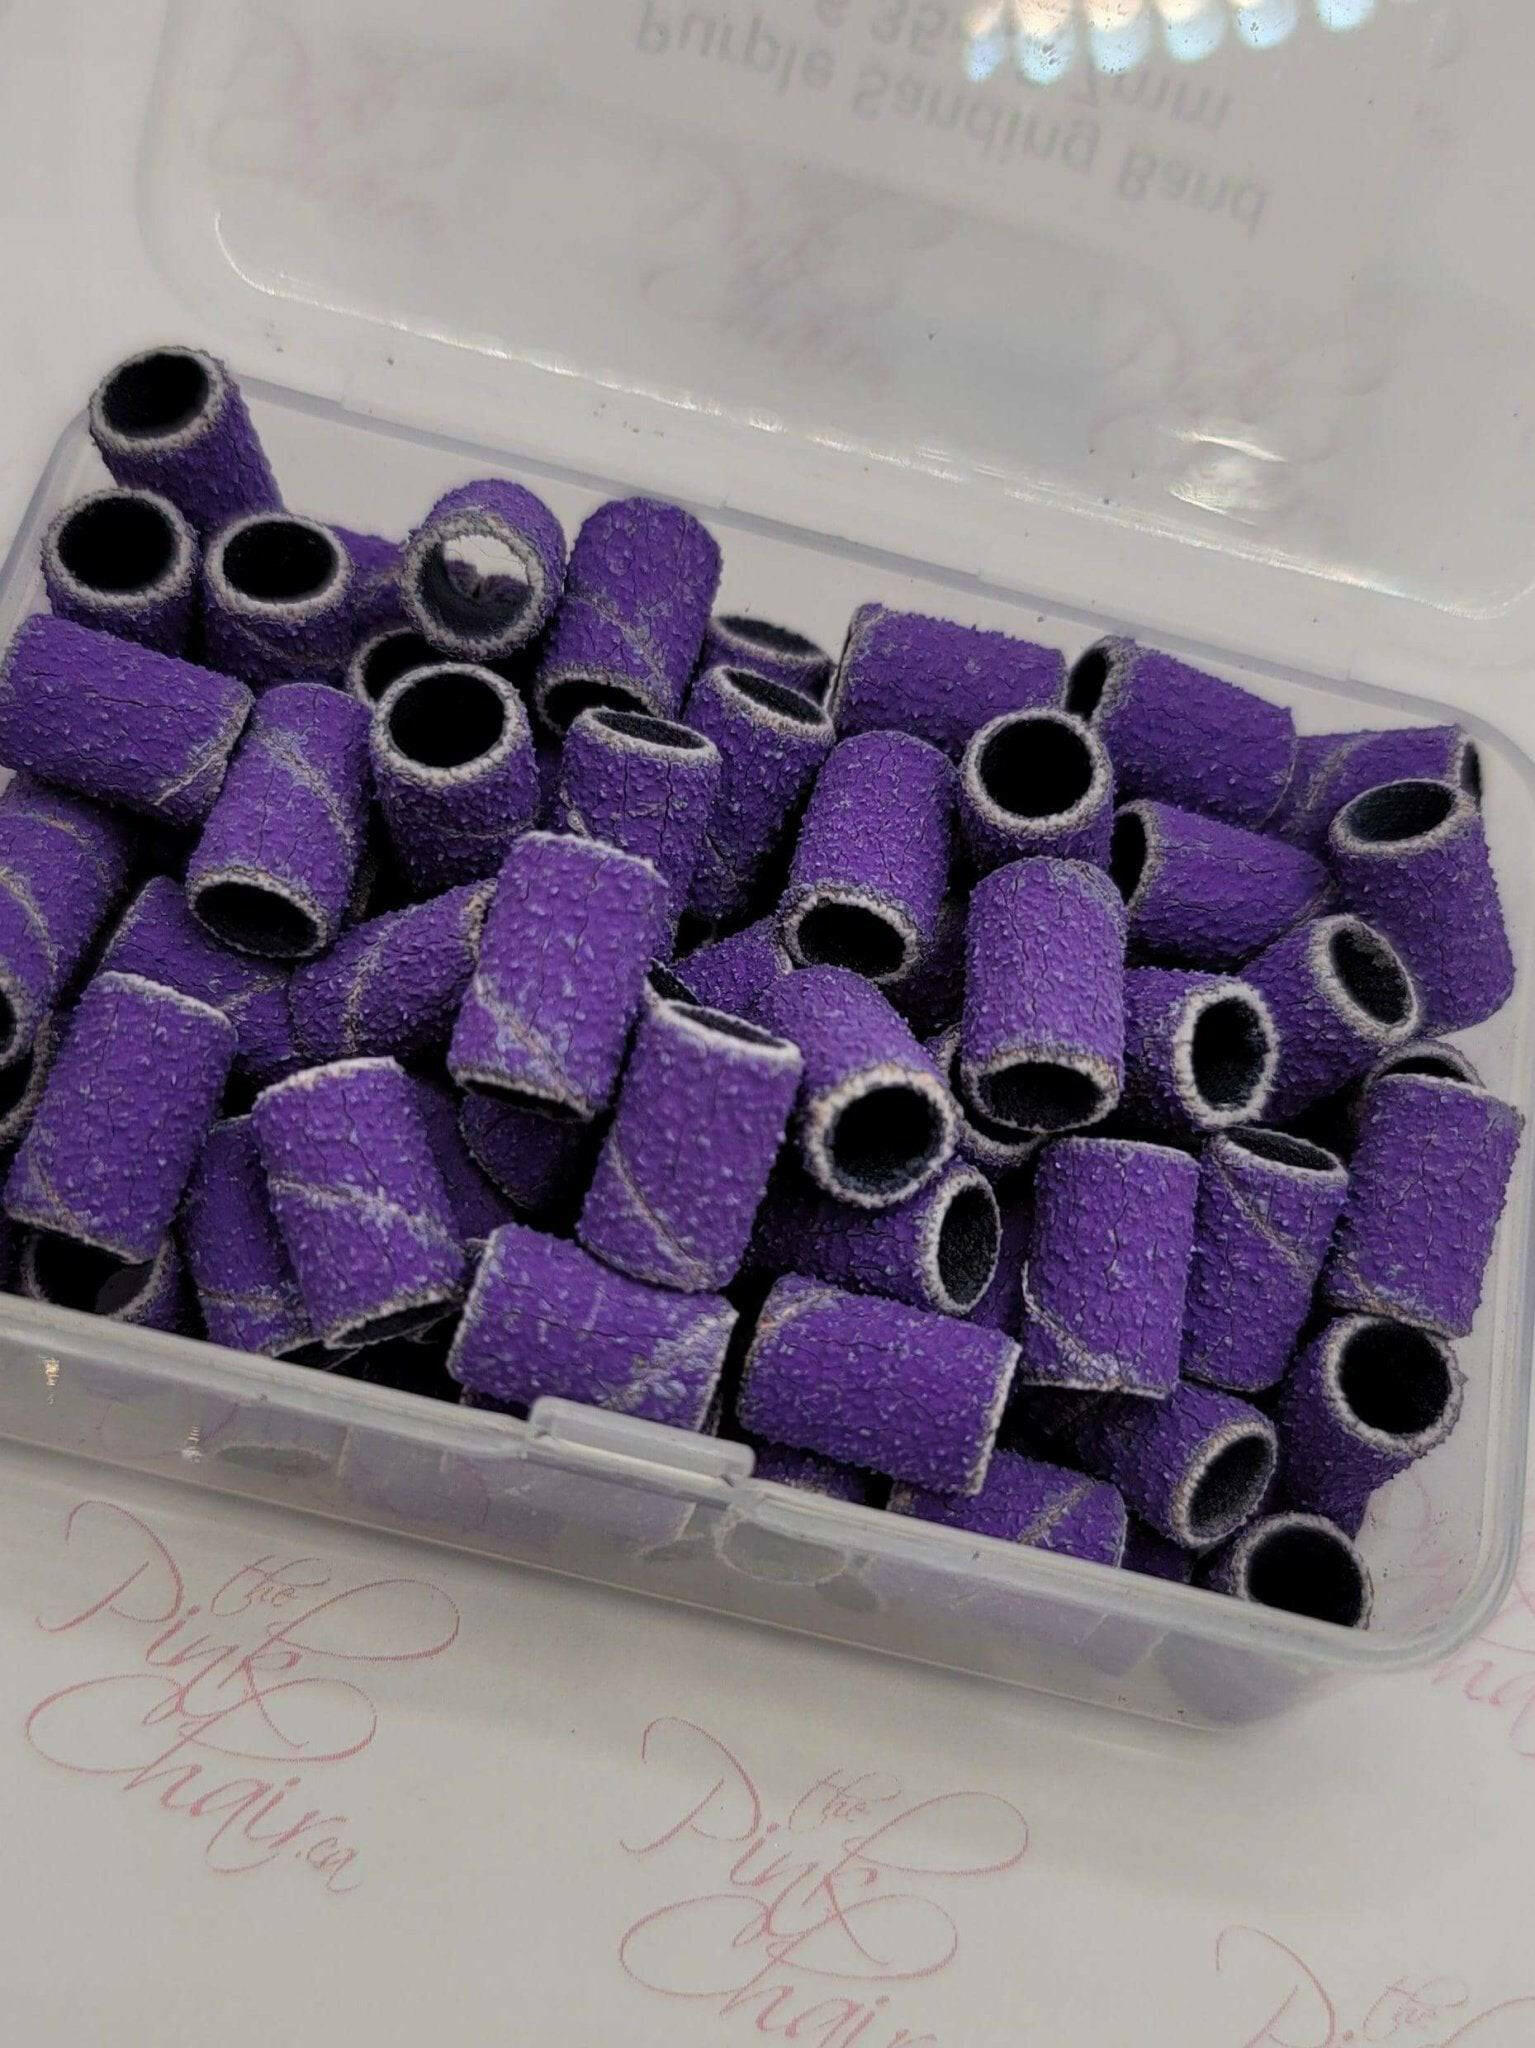 XCoarse Purple Sanding Band - 60grit - thePINKchair.ca - efile bit - thePINKchair nail studio